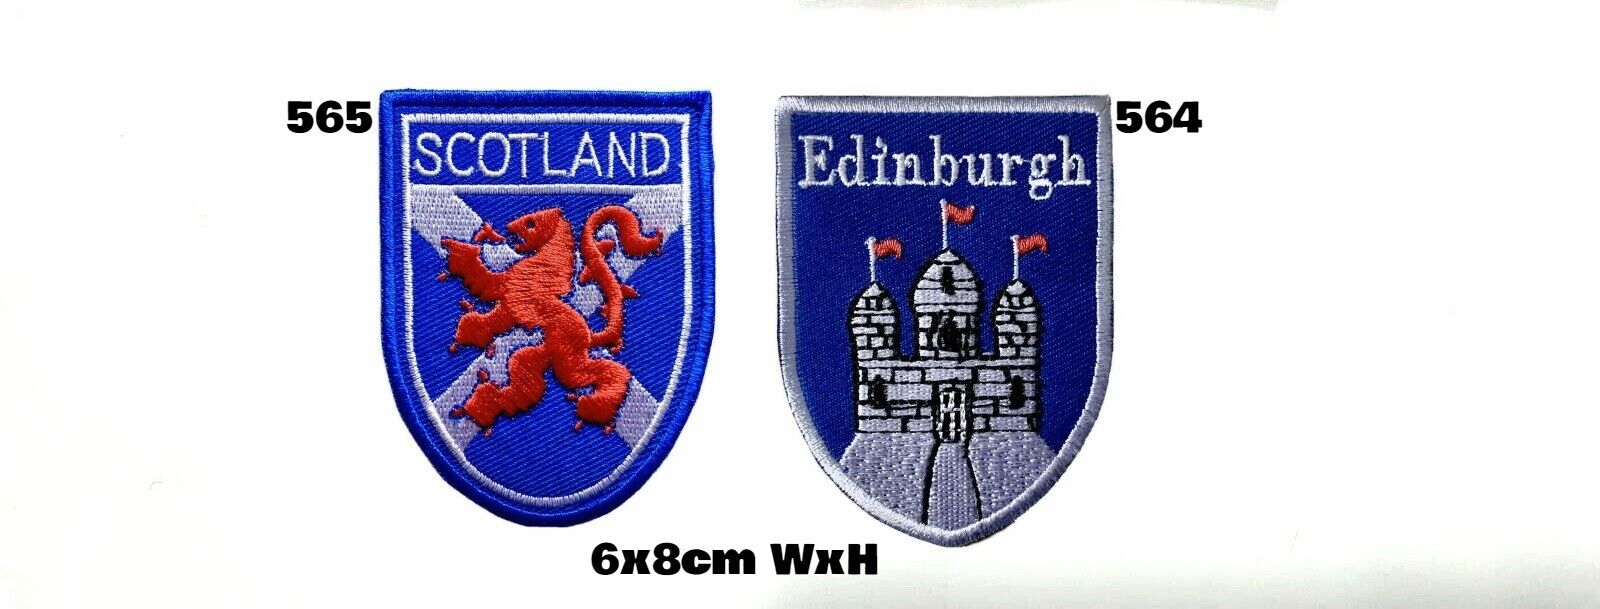 Scotland scottish scot Edinburgh flag Embroidered Iron on Sew on Fabric Patch